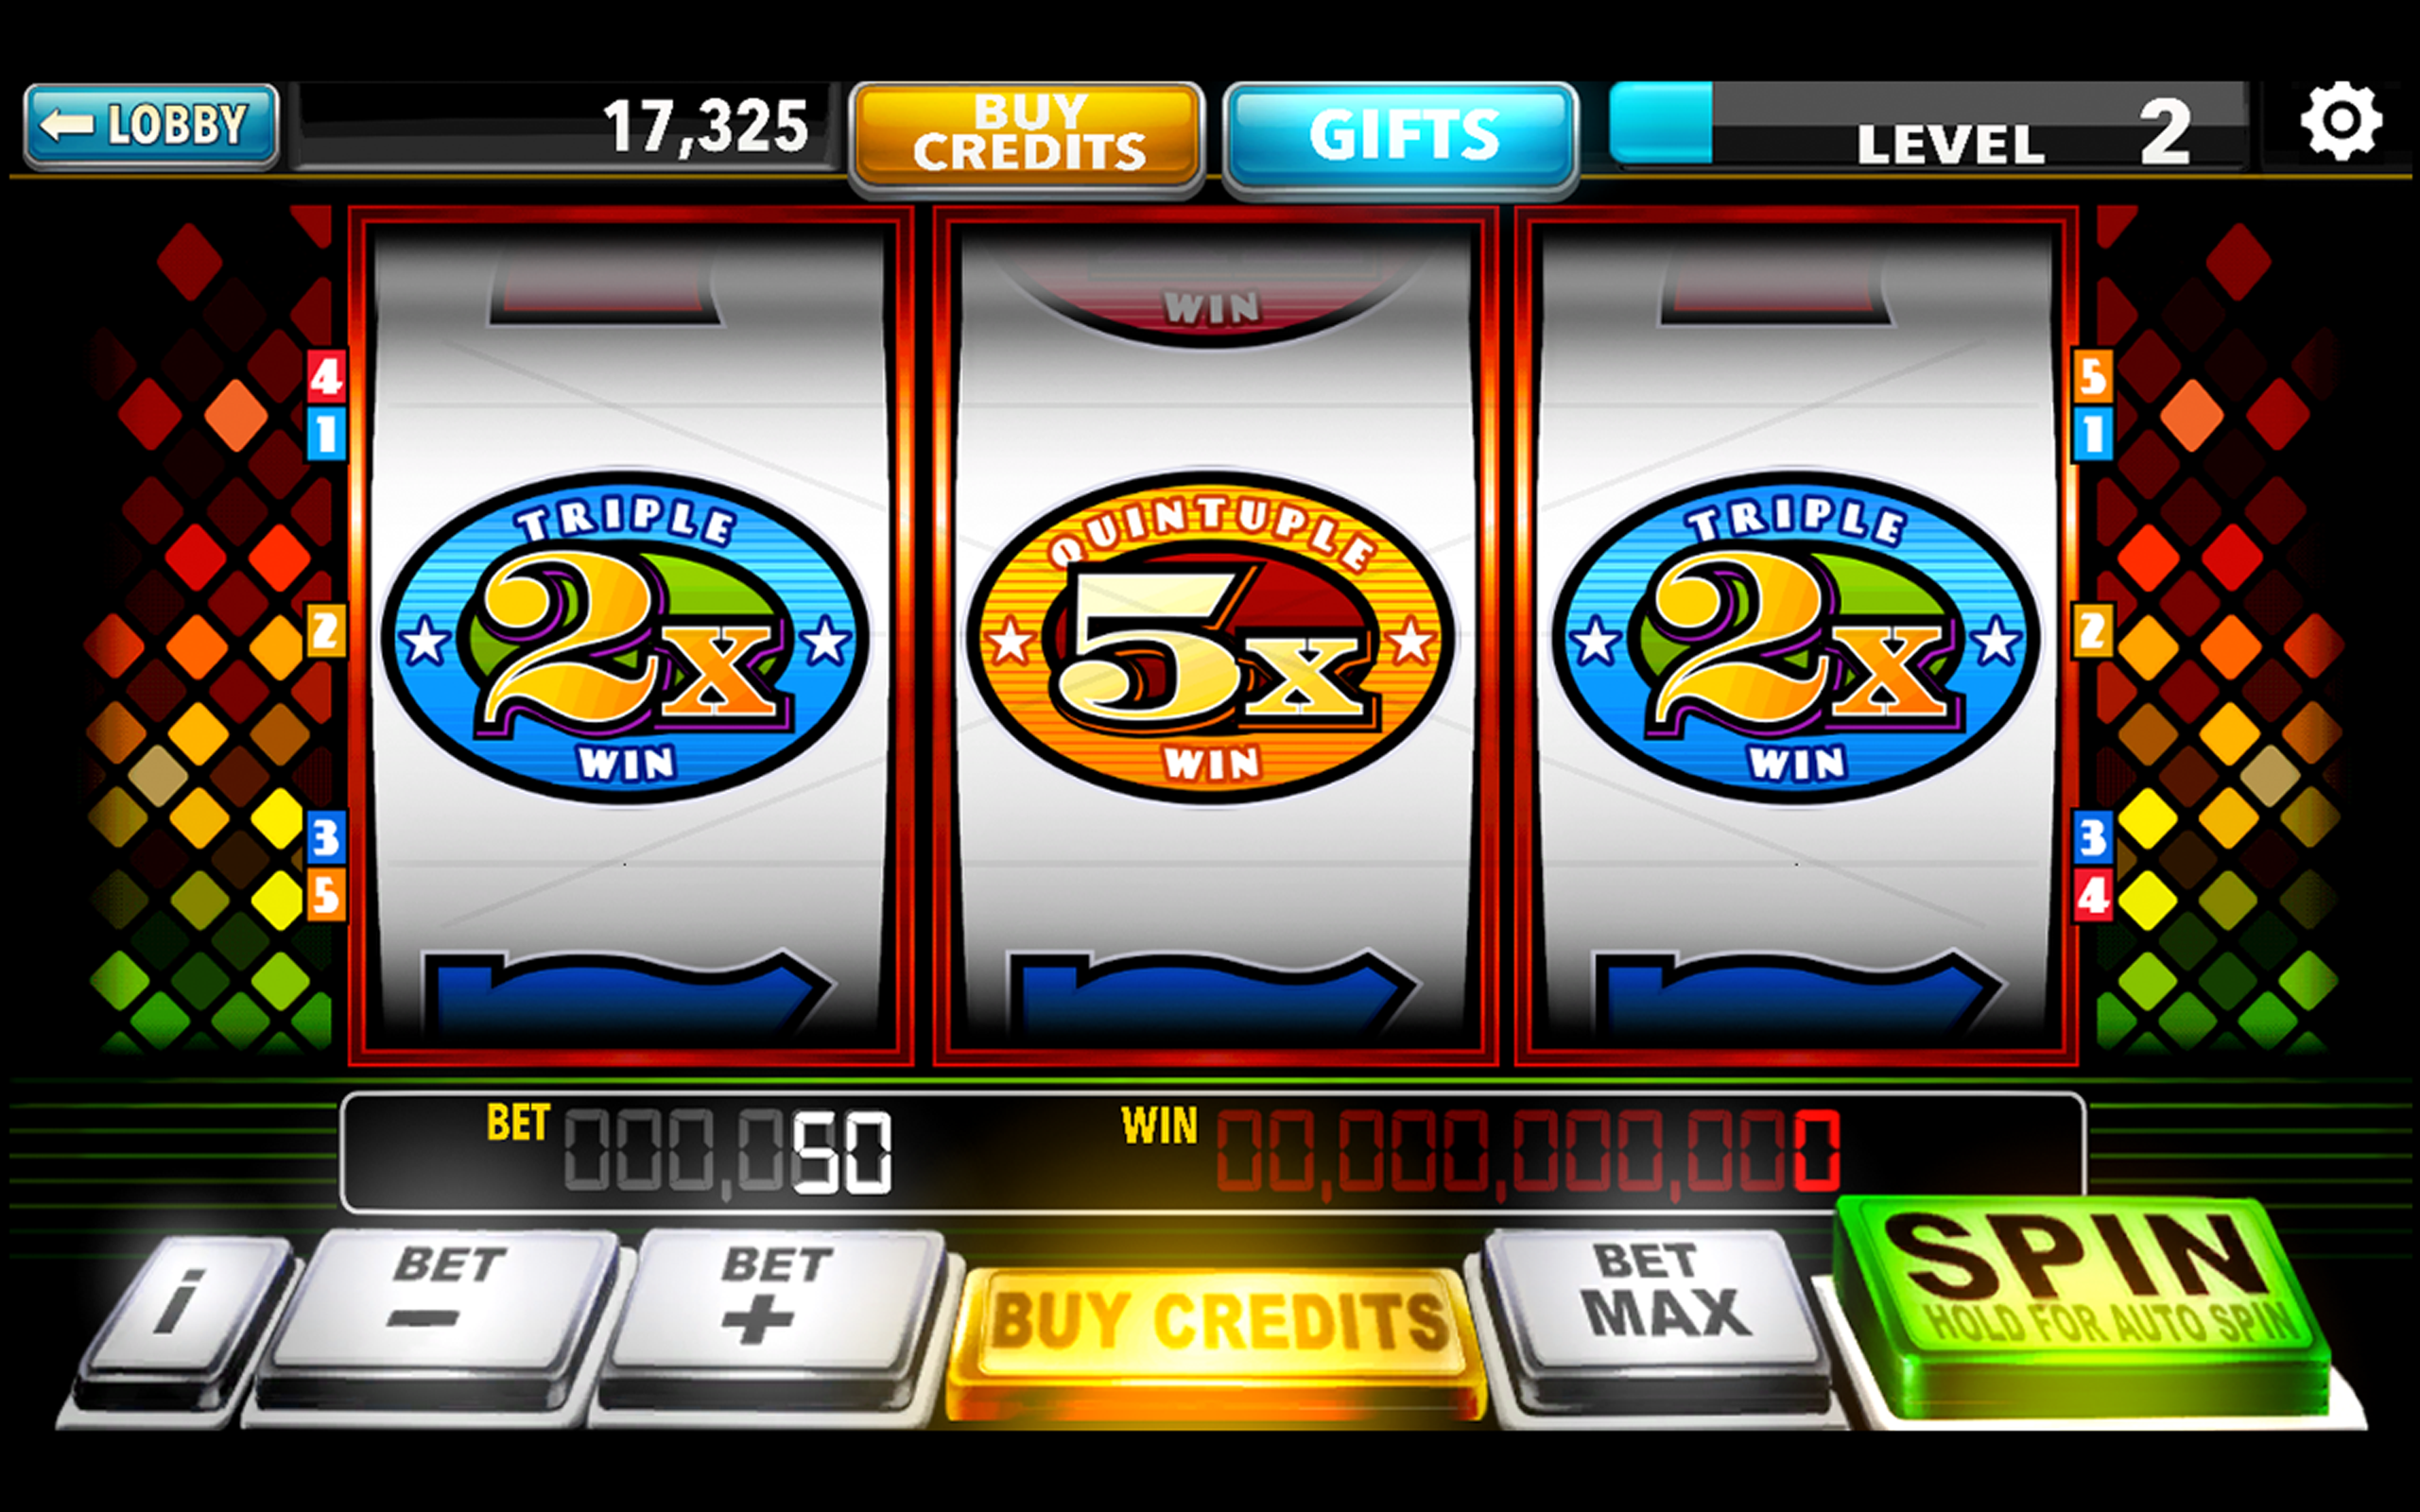 Play free real slot machines